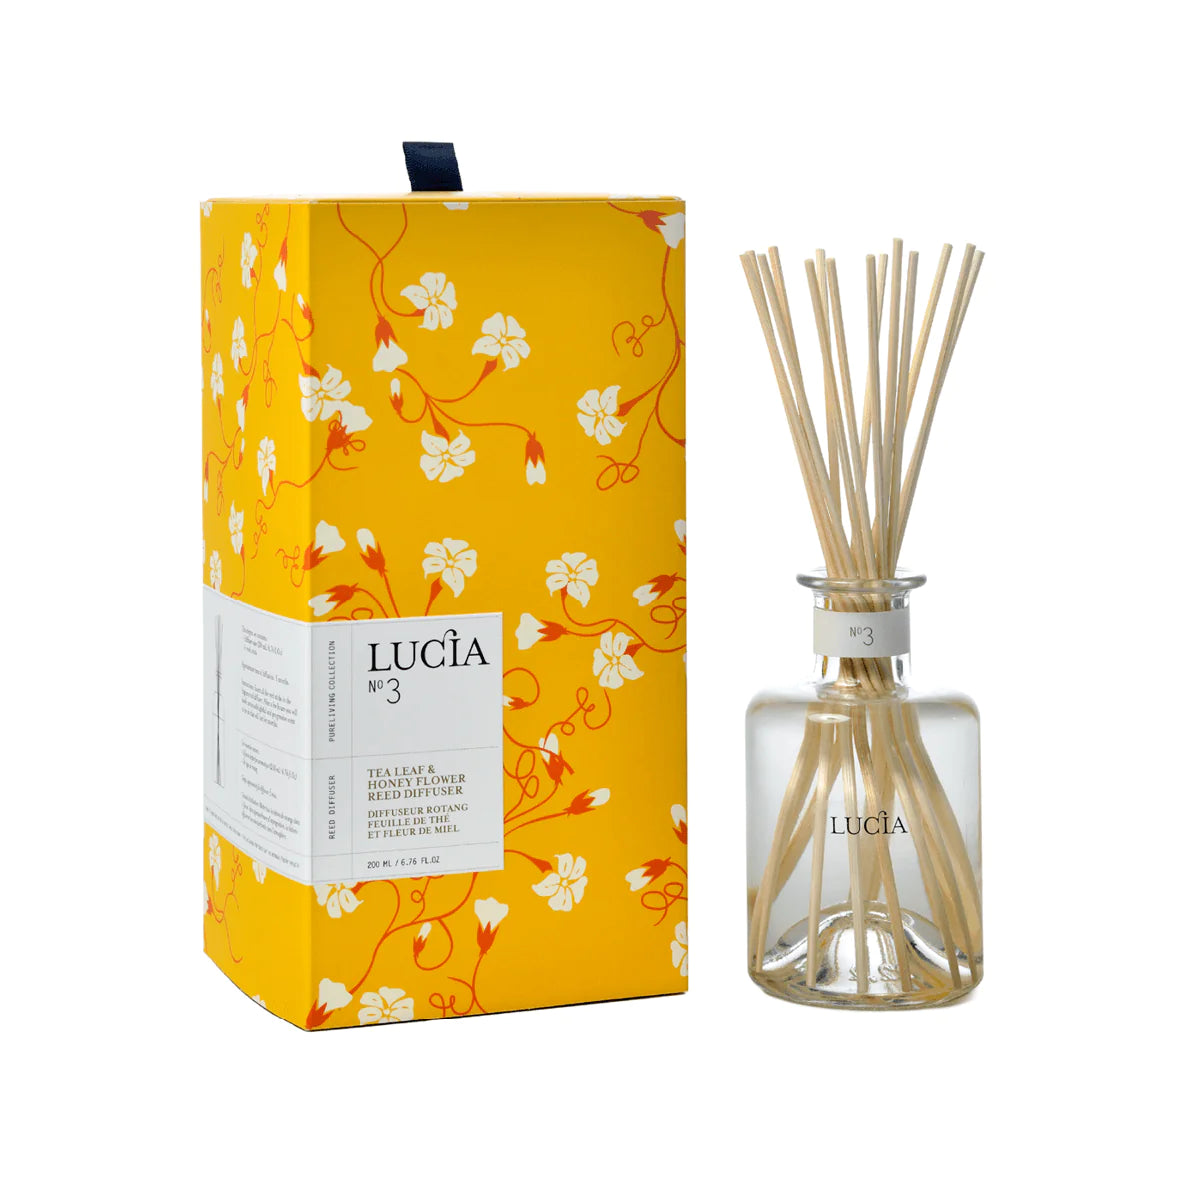 Lucia - No.3 Tea Leaf & Honey Flower Reed Diffuser